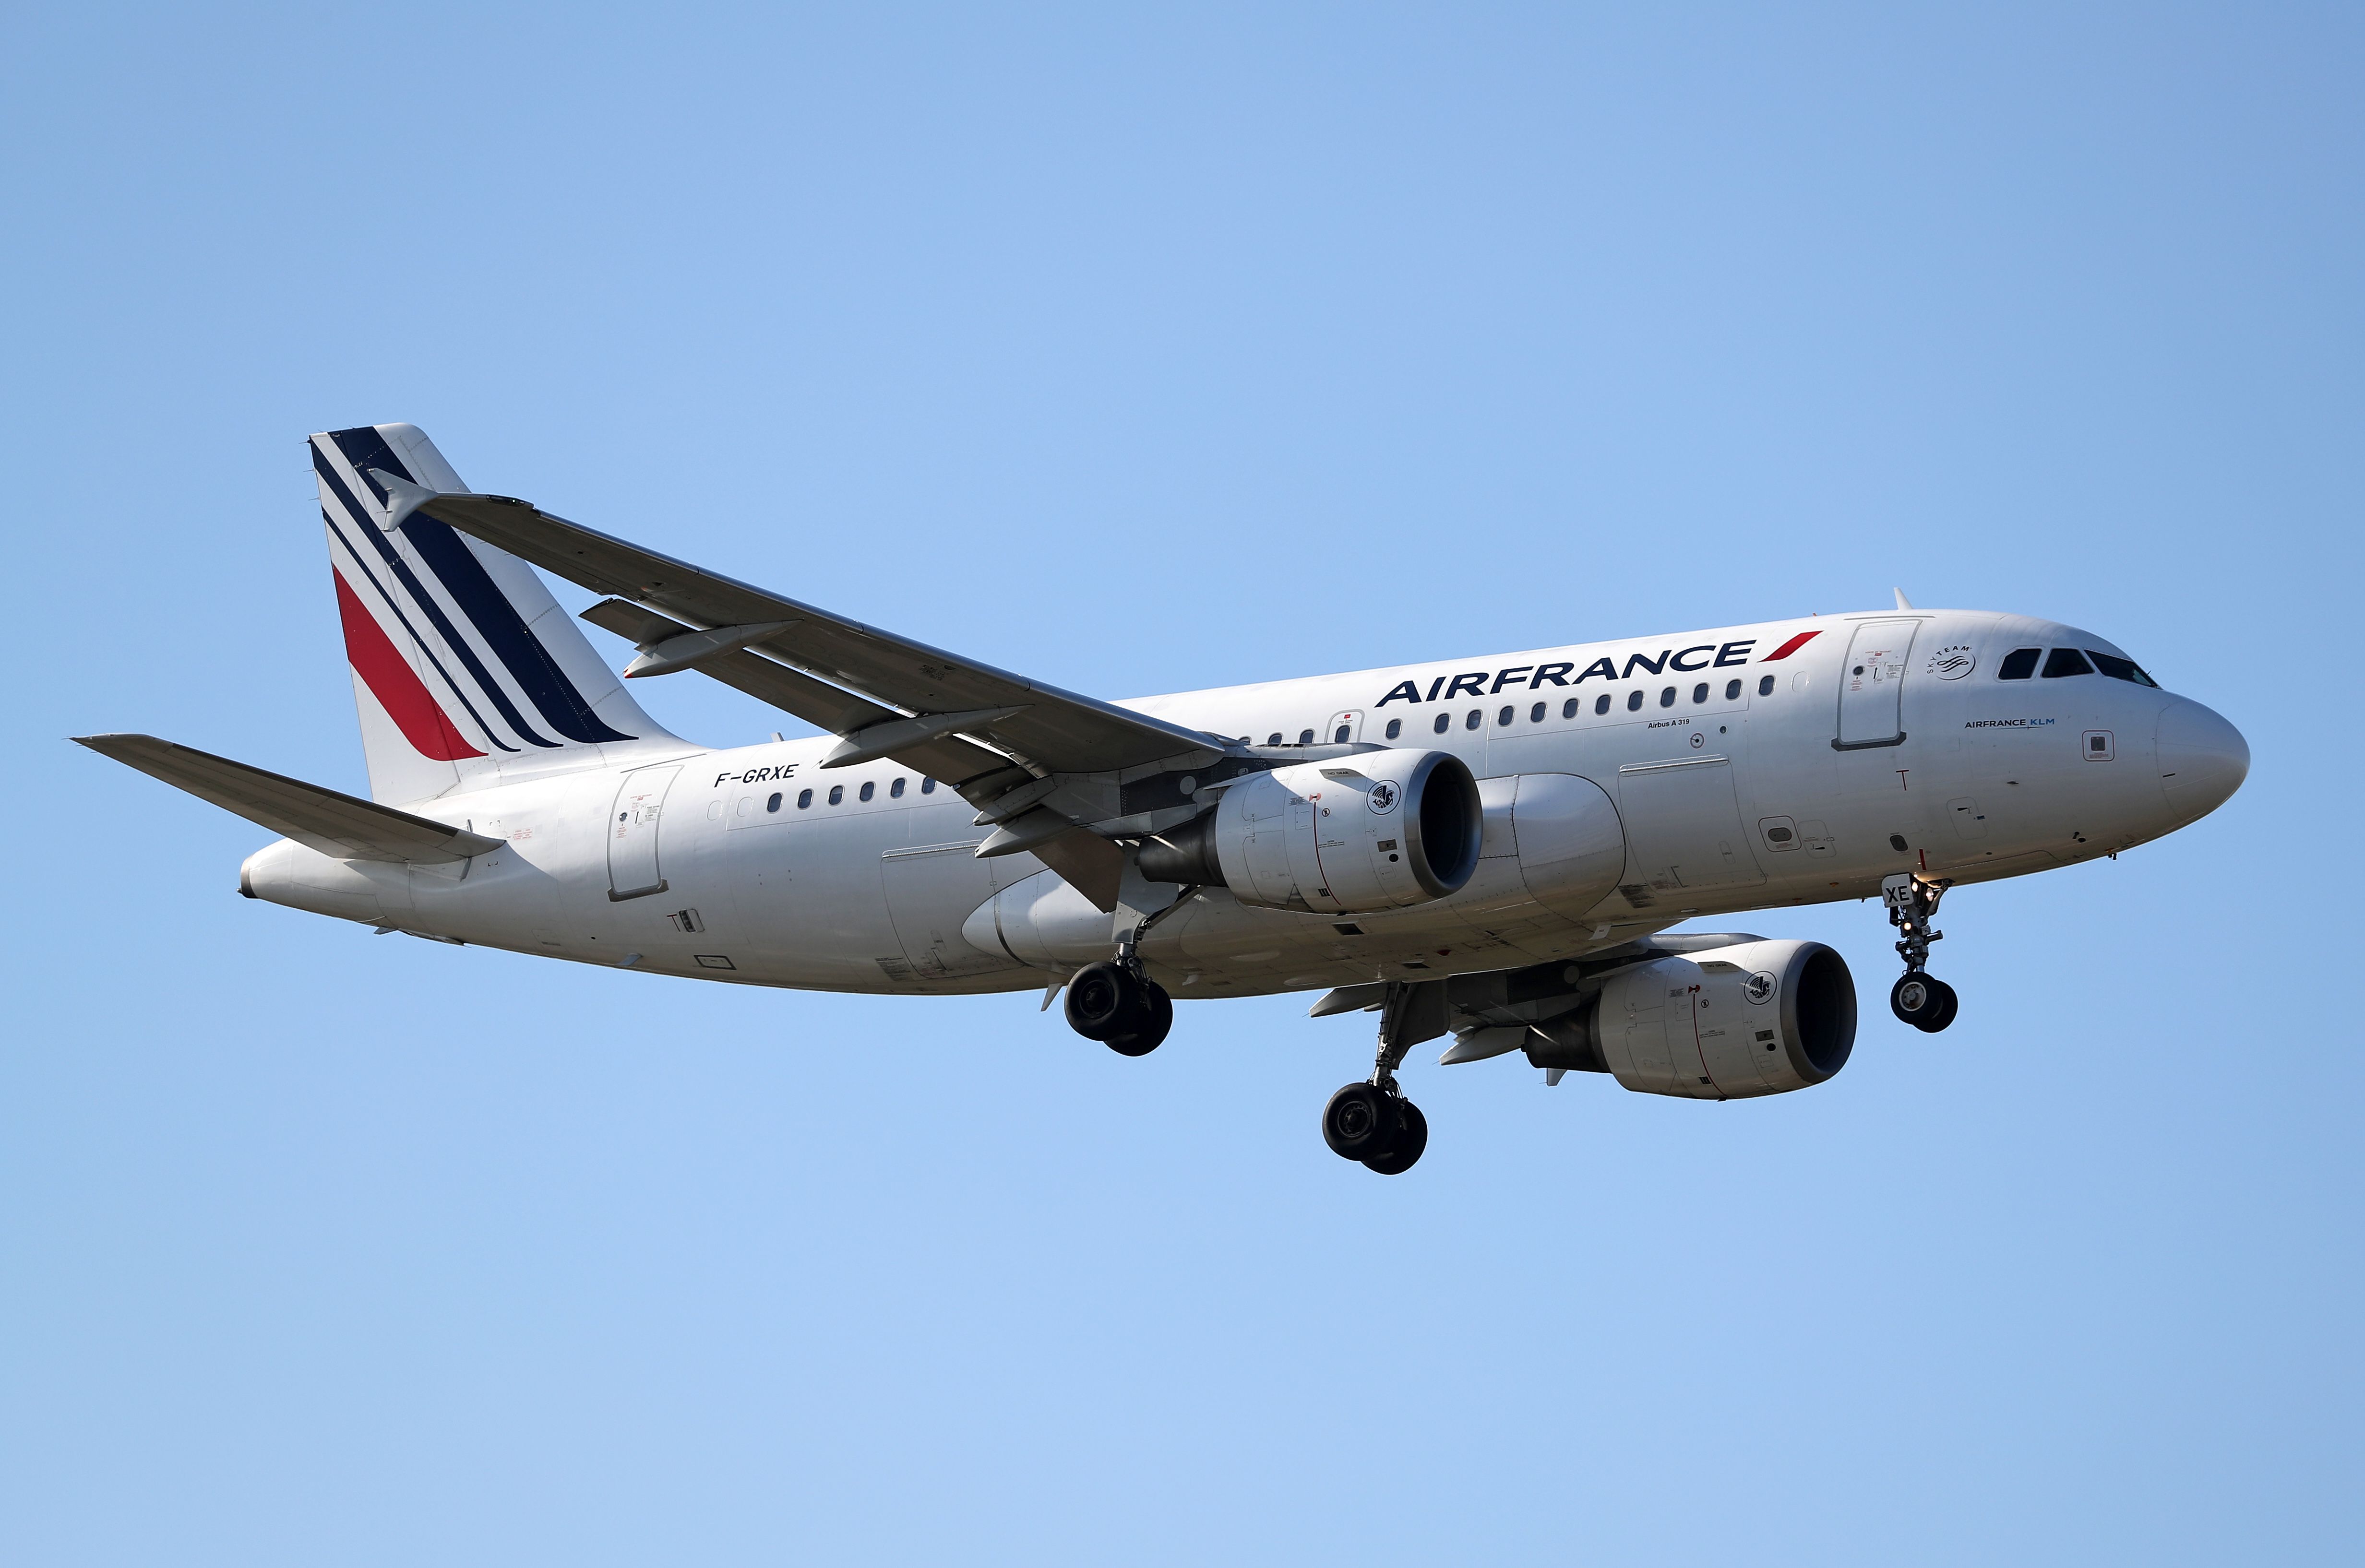 Air France A319 in flight 